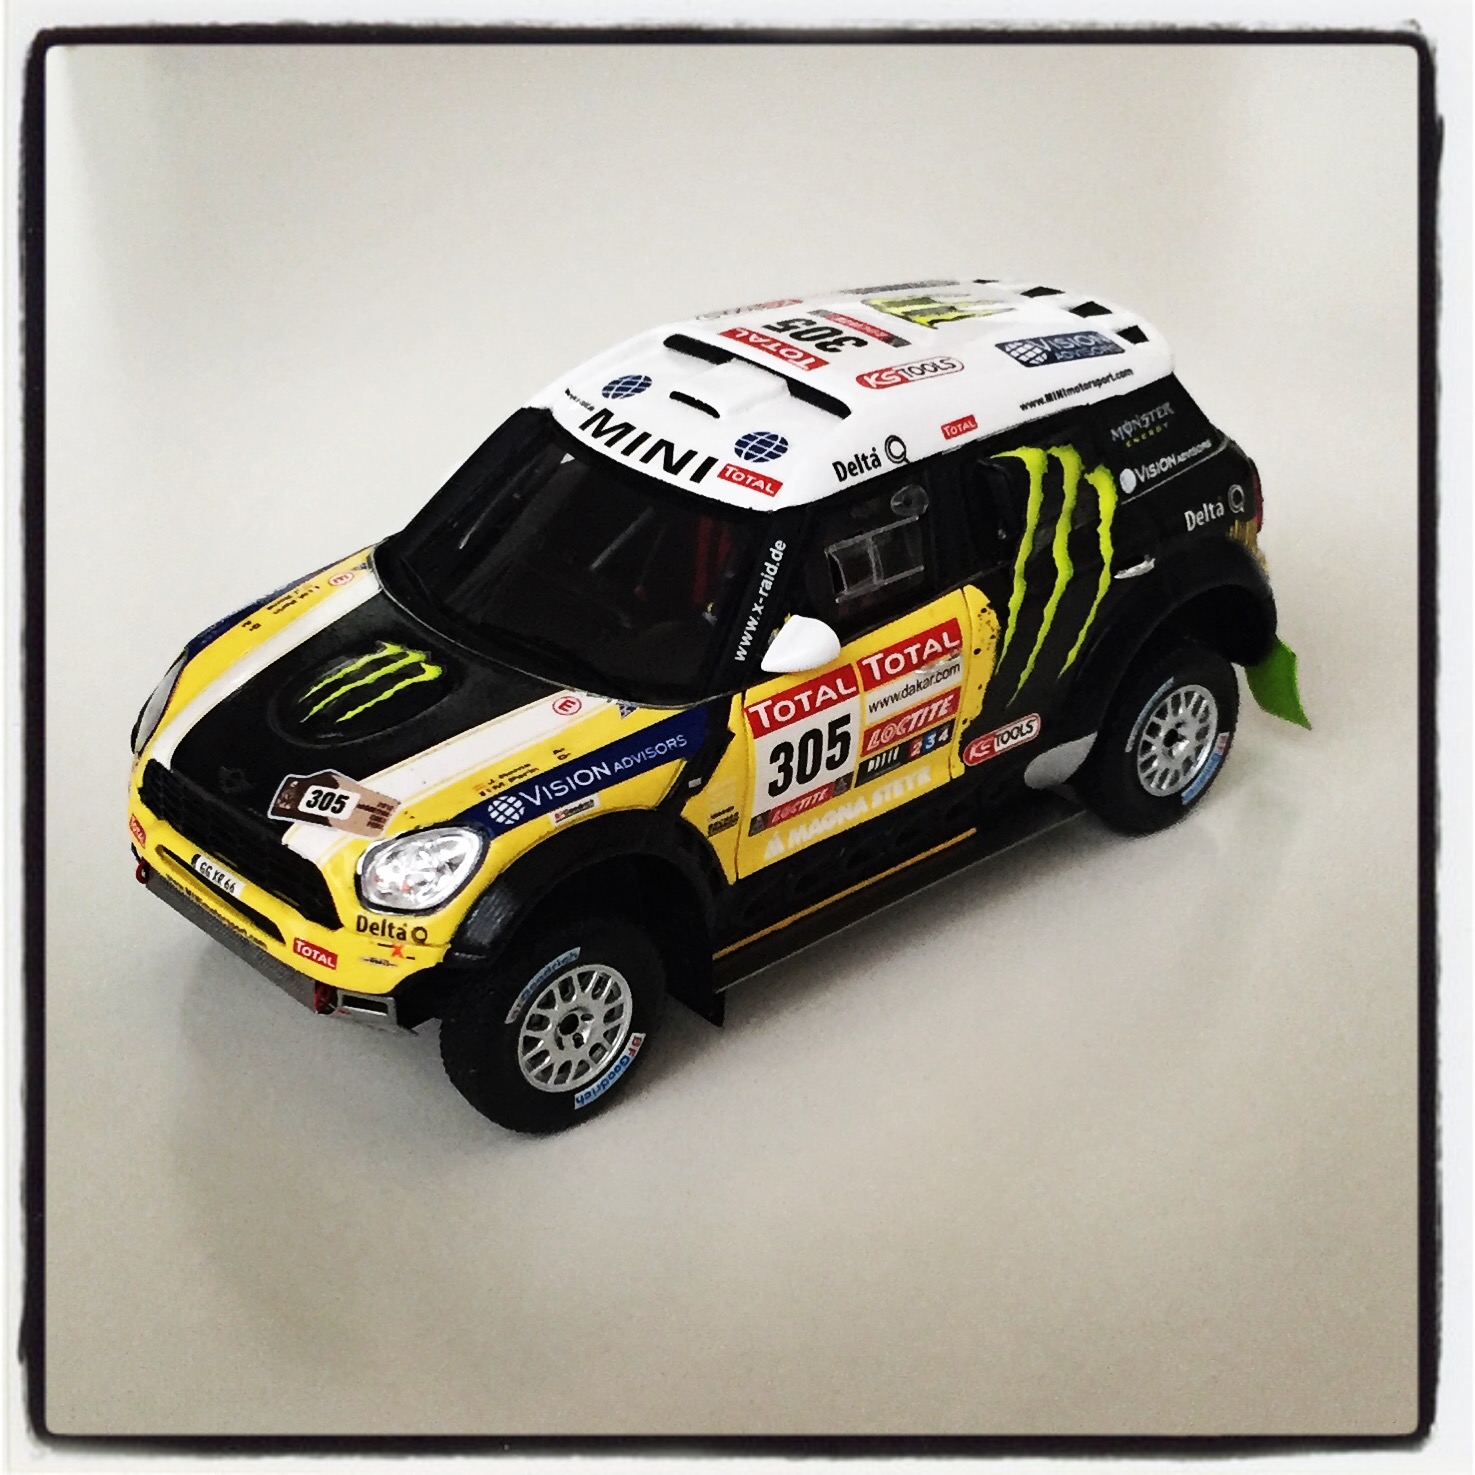  MINI Countryman All4 Racing, 2012, Dakar Tally 2nd place, Monster X-Raid Team, #305 N.Roma/M.Perin (tsmmodel)